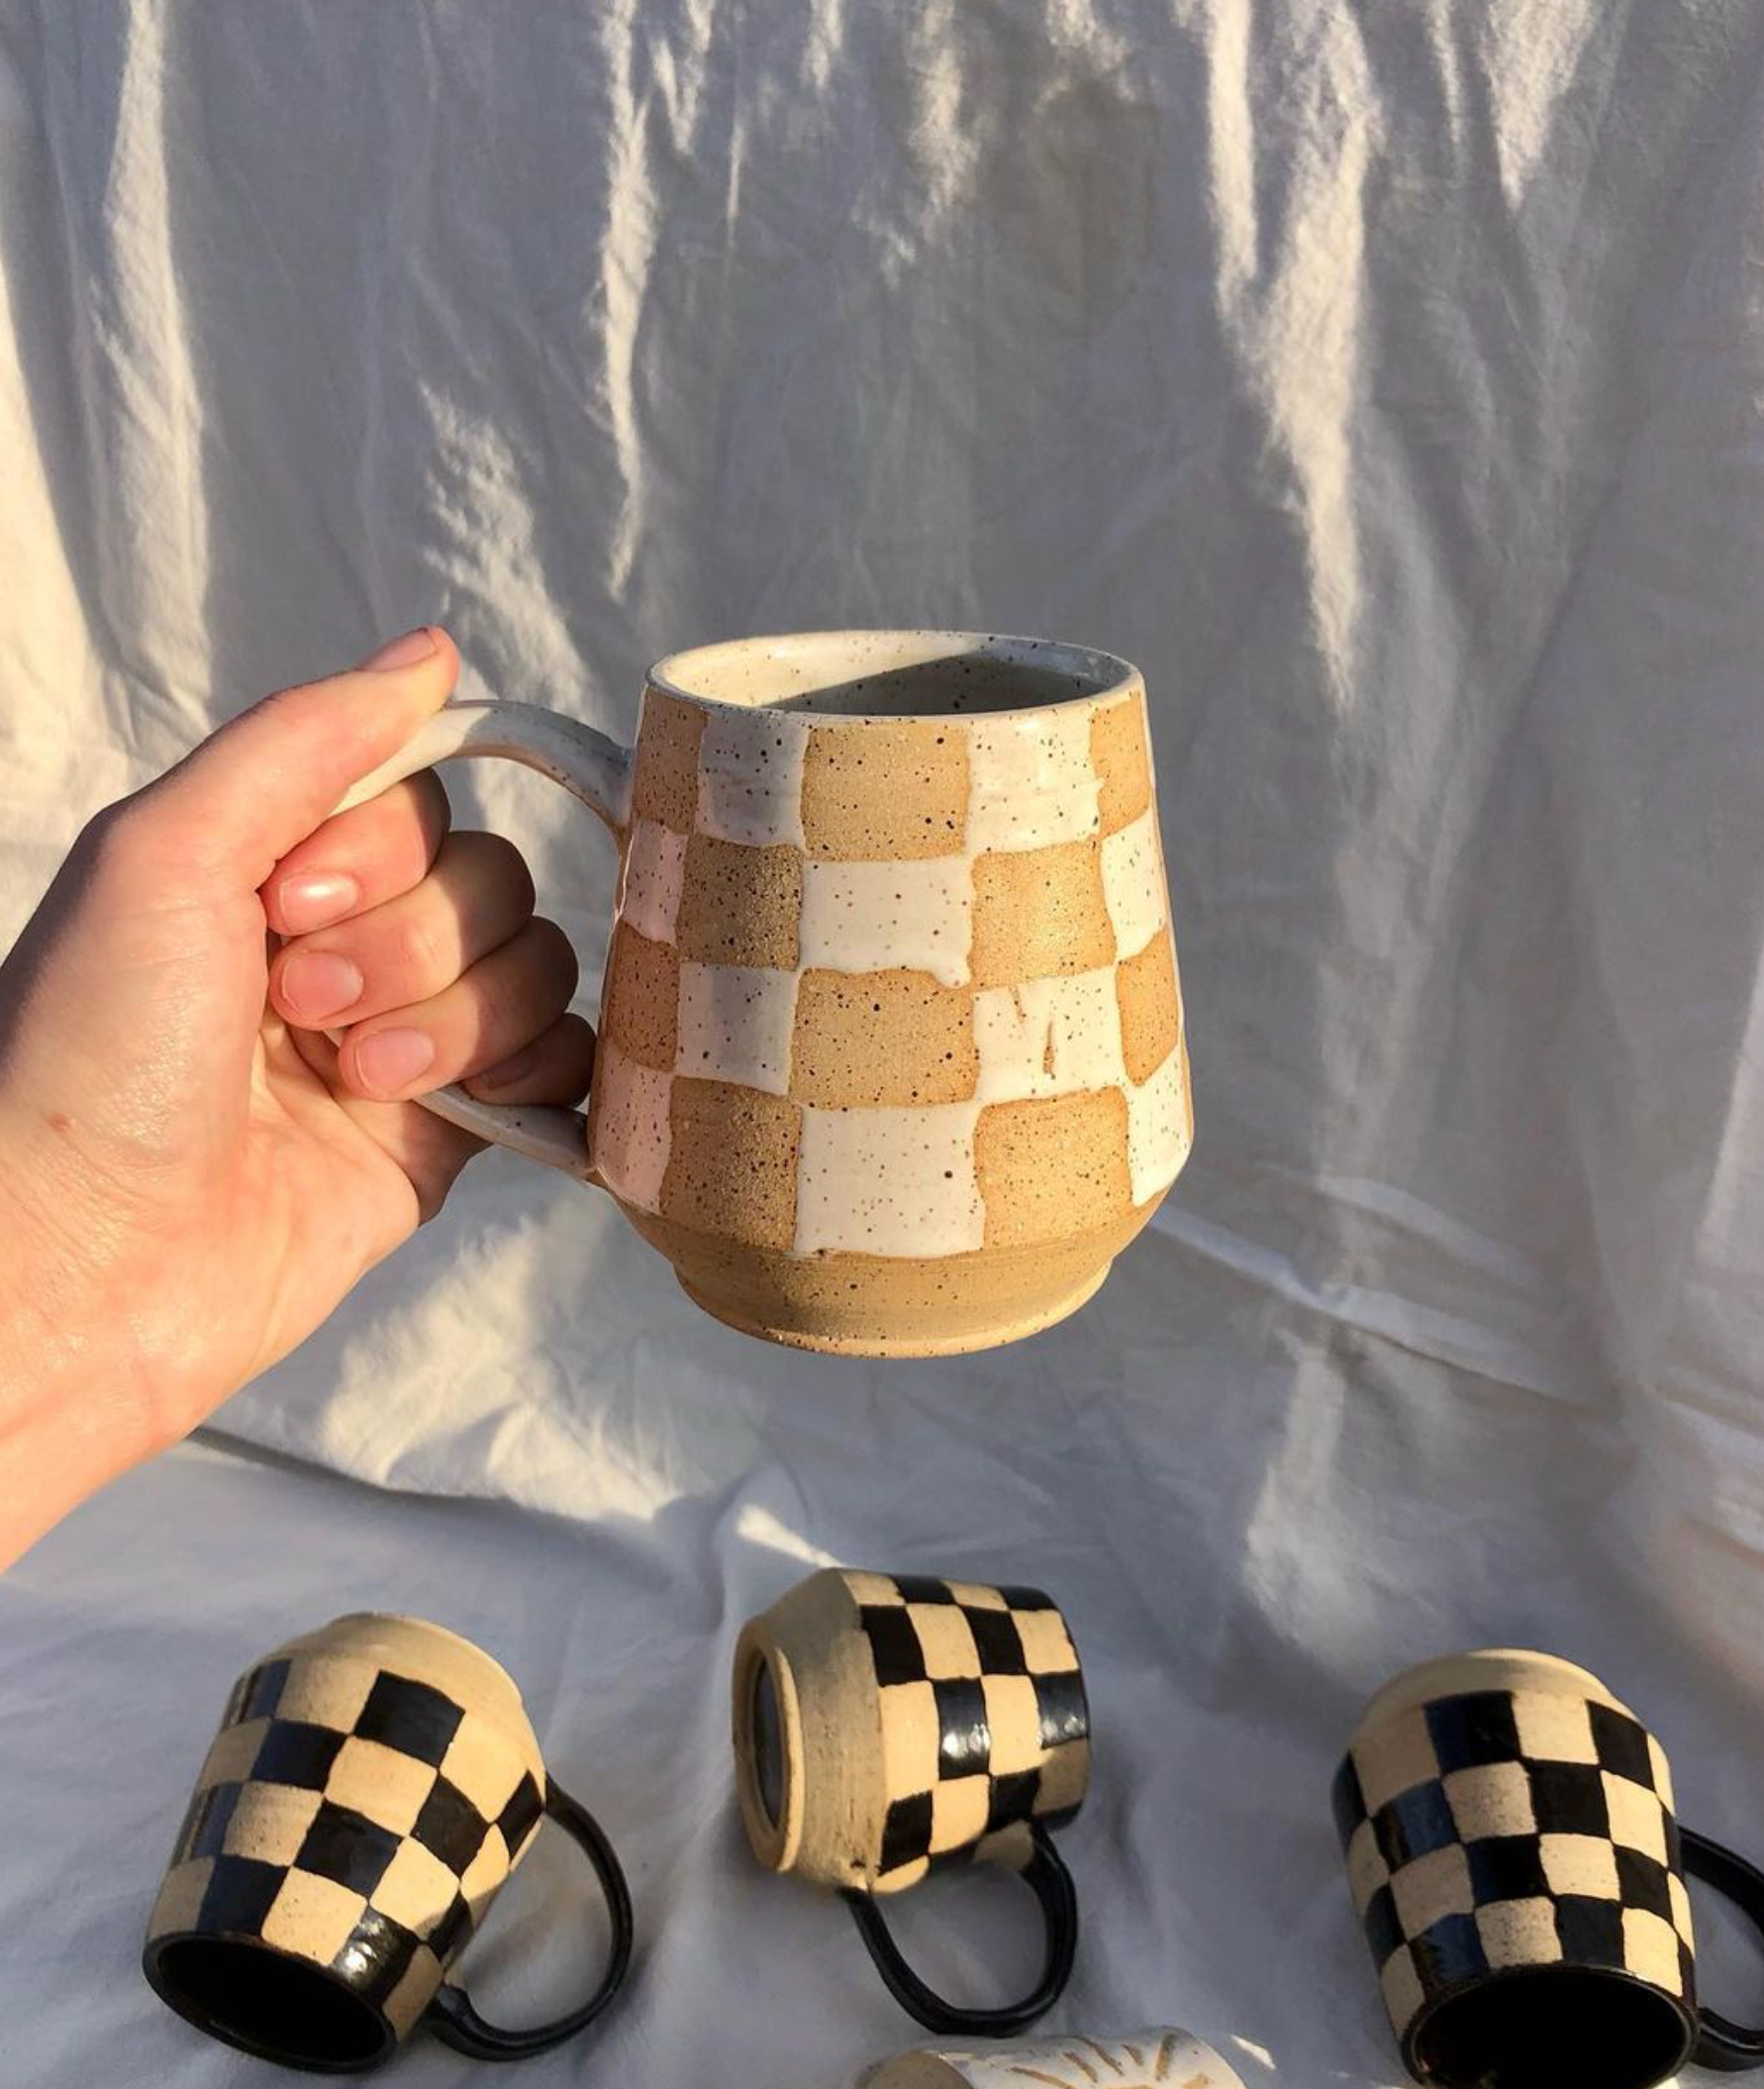 Person holds checker print ceramic mug in white + tan in front of white + black ceramic mugs, created by Cora Freeman Design